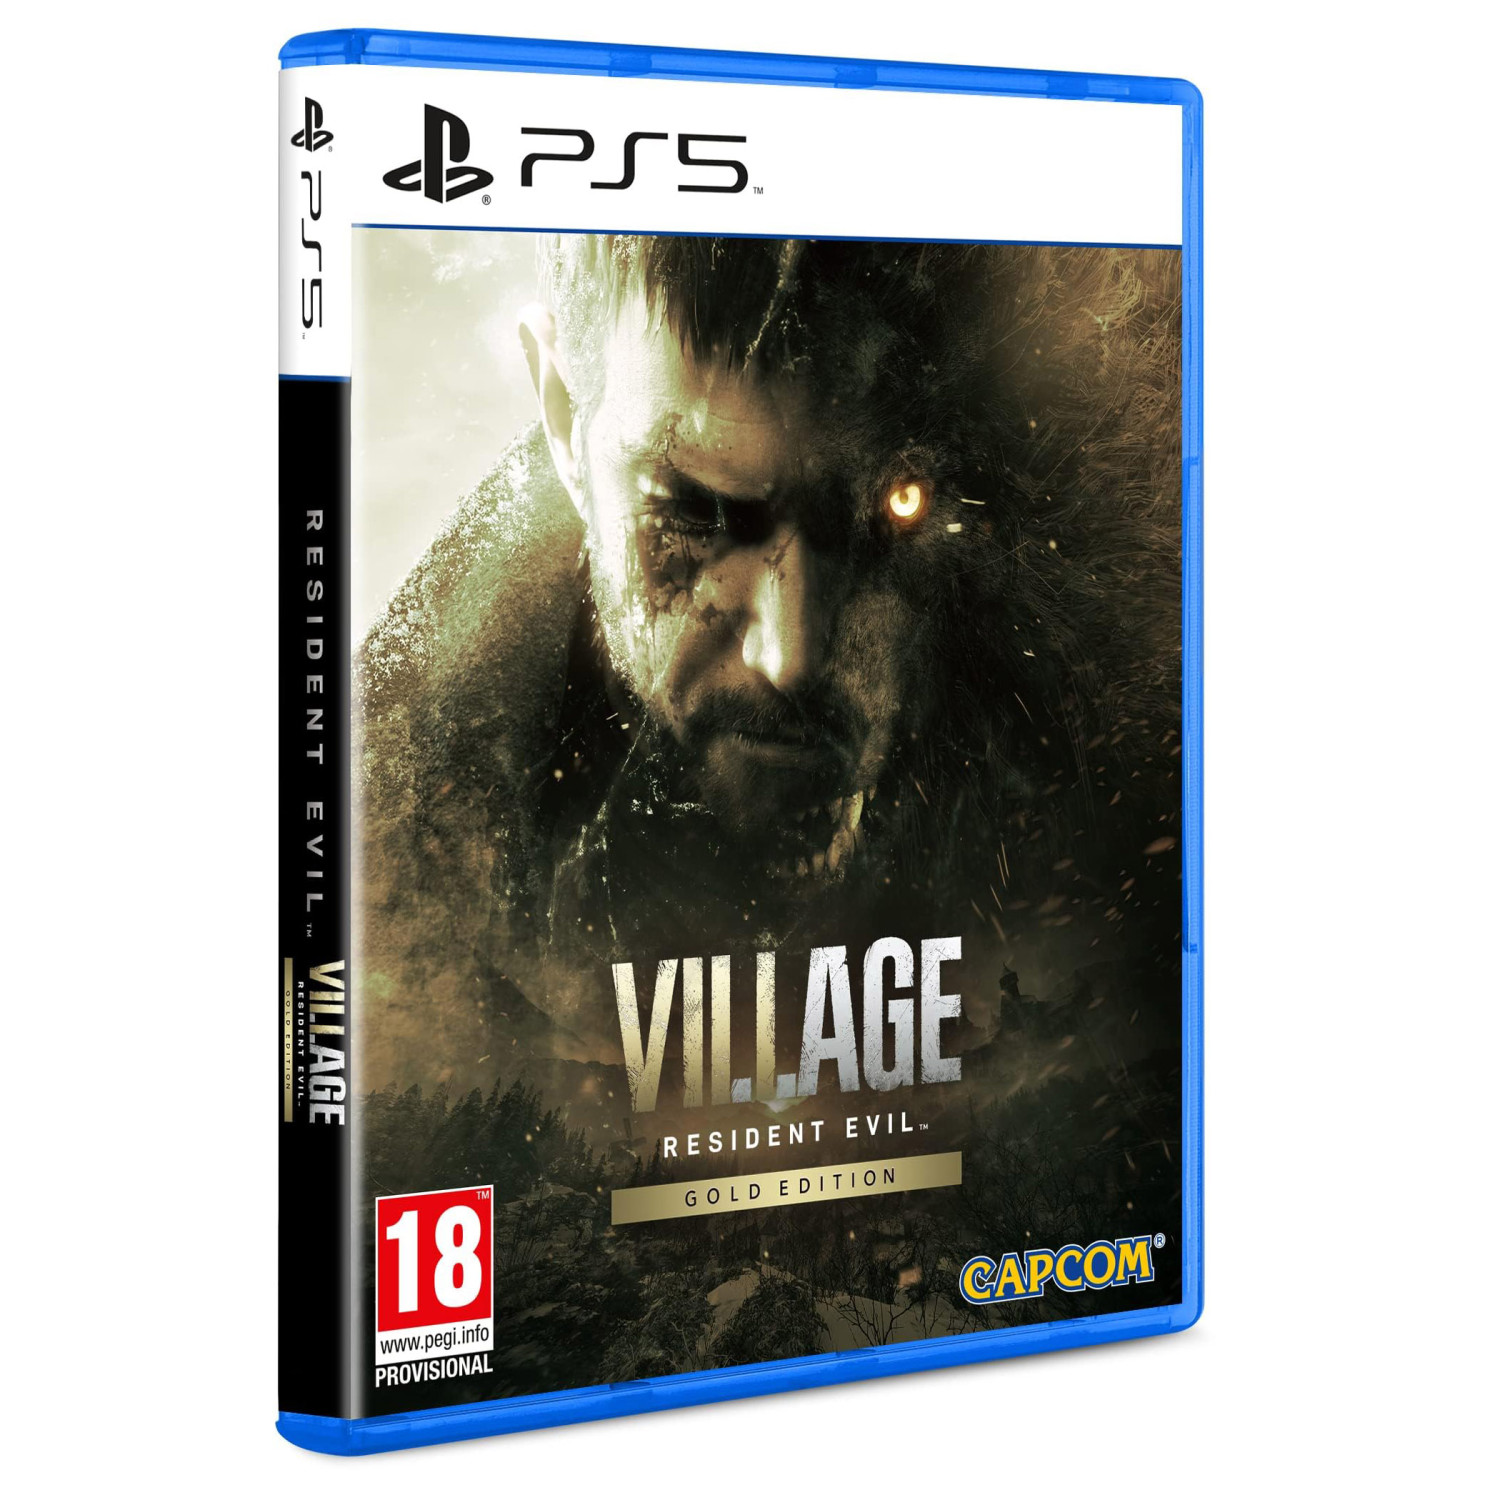 Ø¨Ø§Ø²ÛŒ Resident Evil Village: Gold Edition - PS5-1